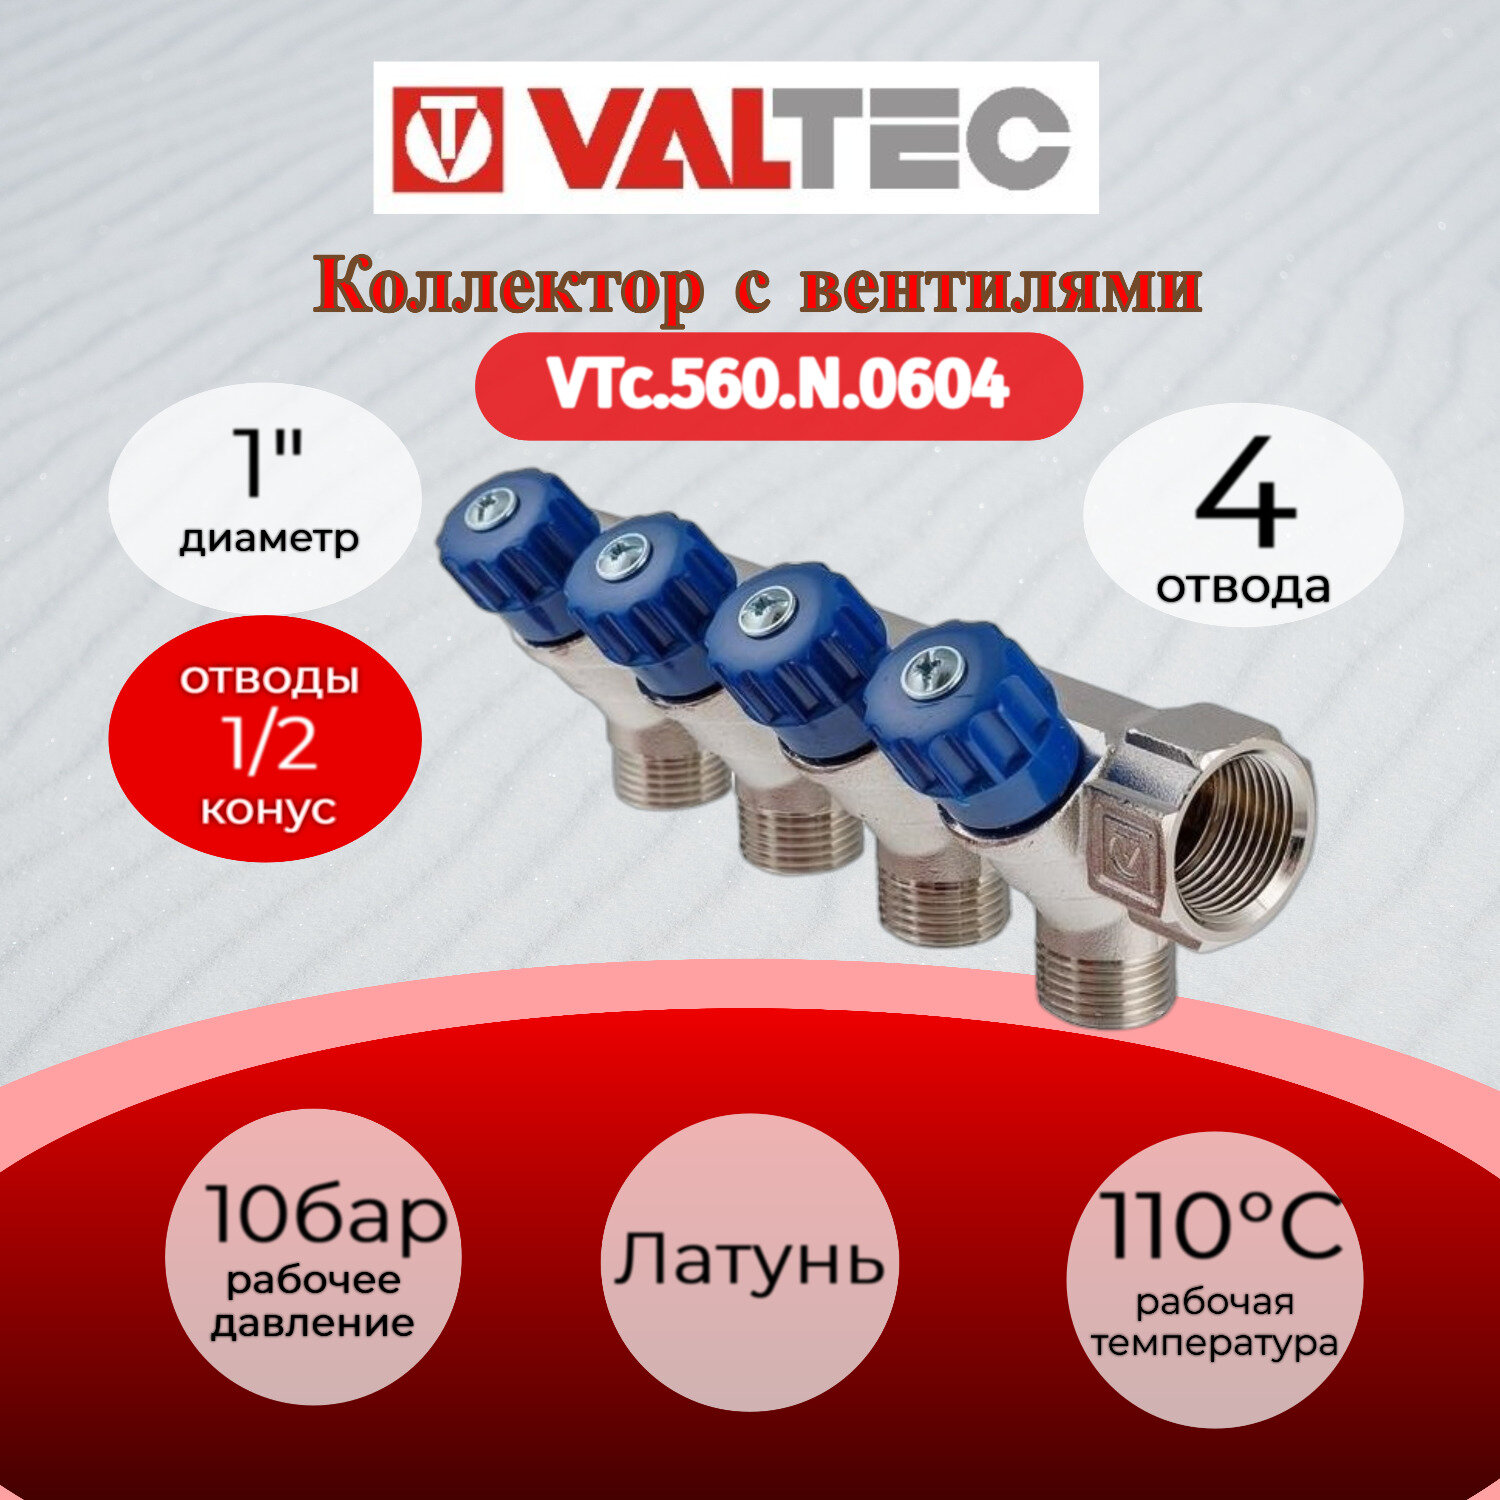 Коллектор с регулирующими вентилями, 1"х4 выхода 1/2" нар. VALTEC VTc.560. N.0604